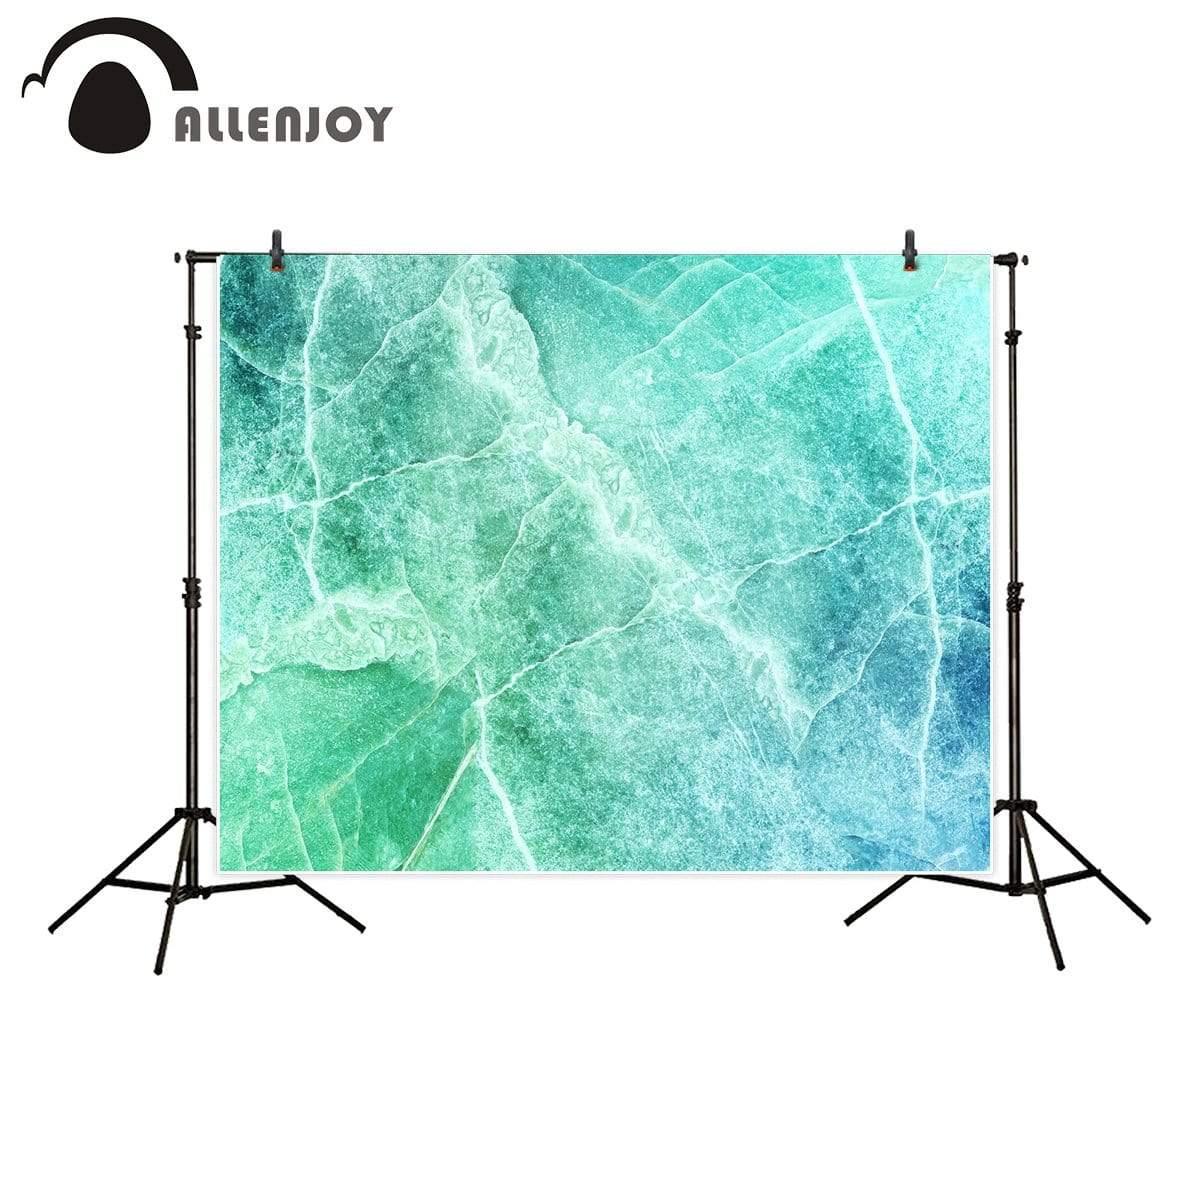 Allenjoy Photography Background Blue-Green Marble Pattern Backdrop for Photo Studio New - Allenjoystudio